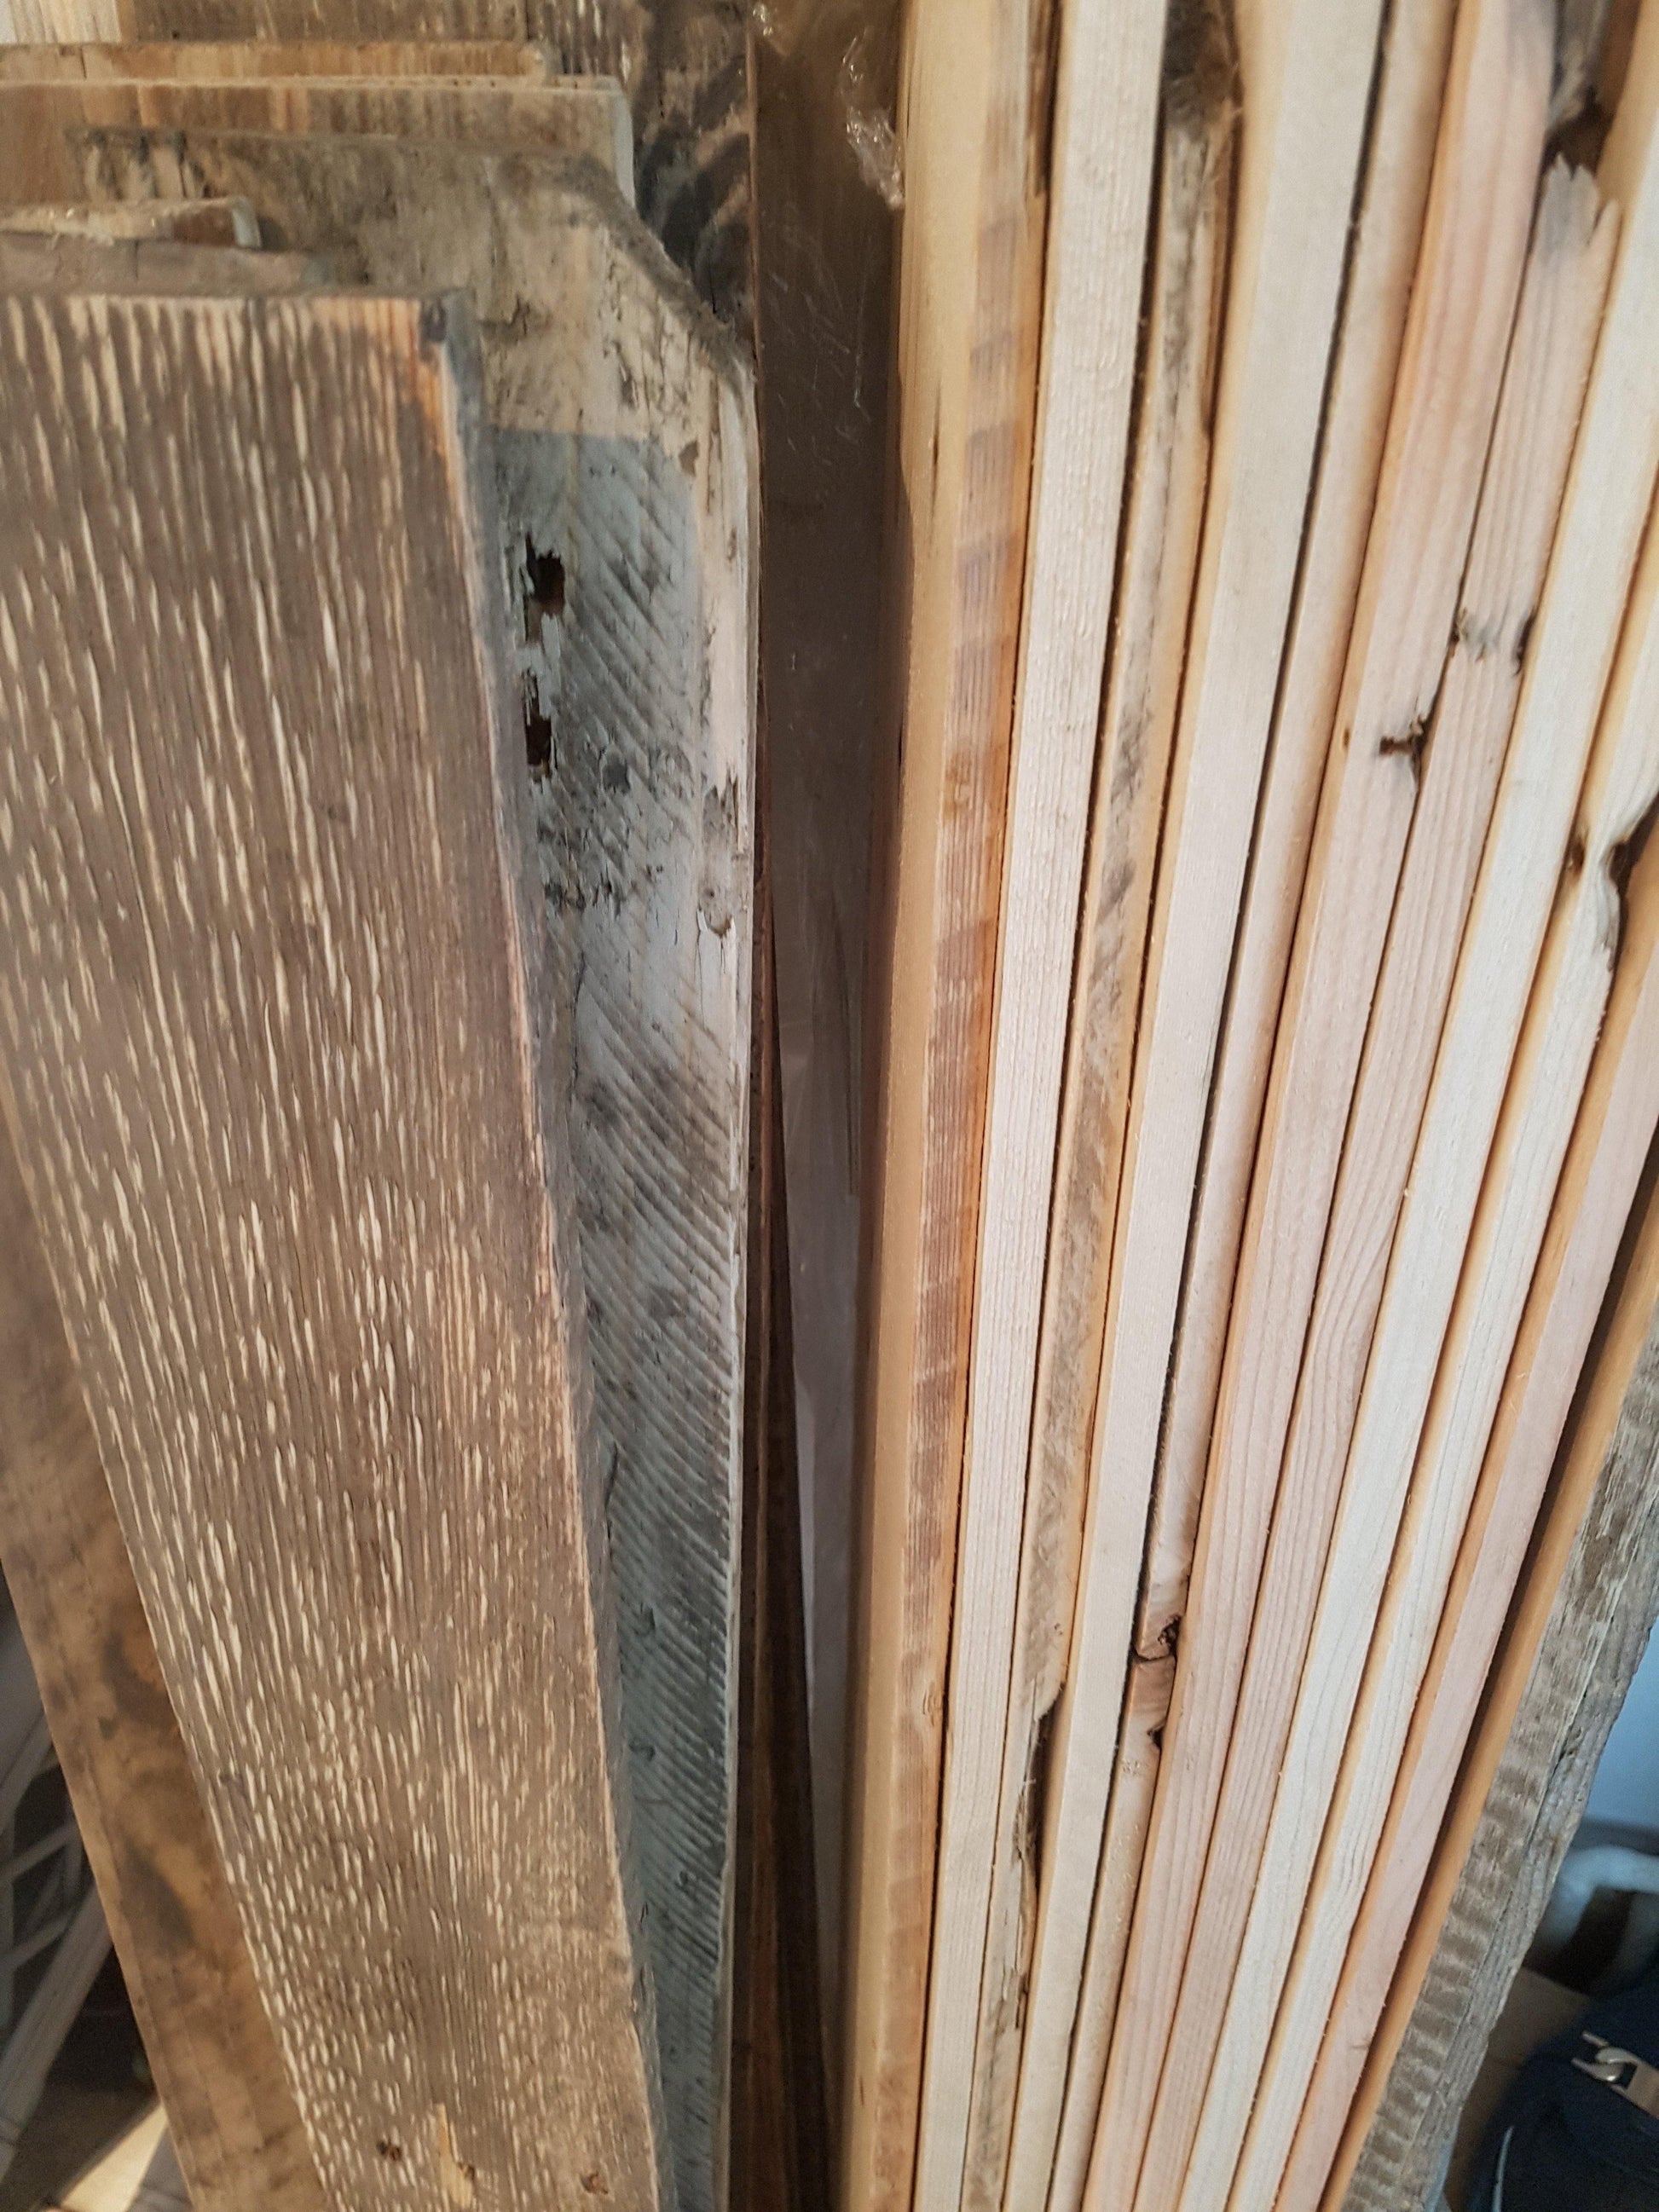 7 Sqm Reclaimed Wooden Planks - Rustic Wall Cladding - Eco-Friendly DIY Project - Anpio woods ltd